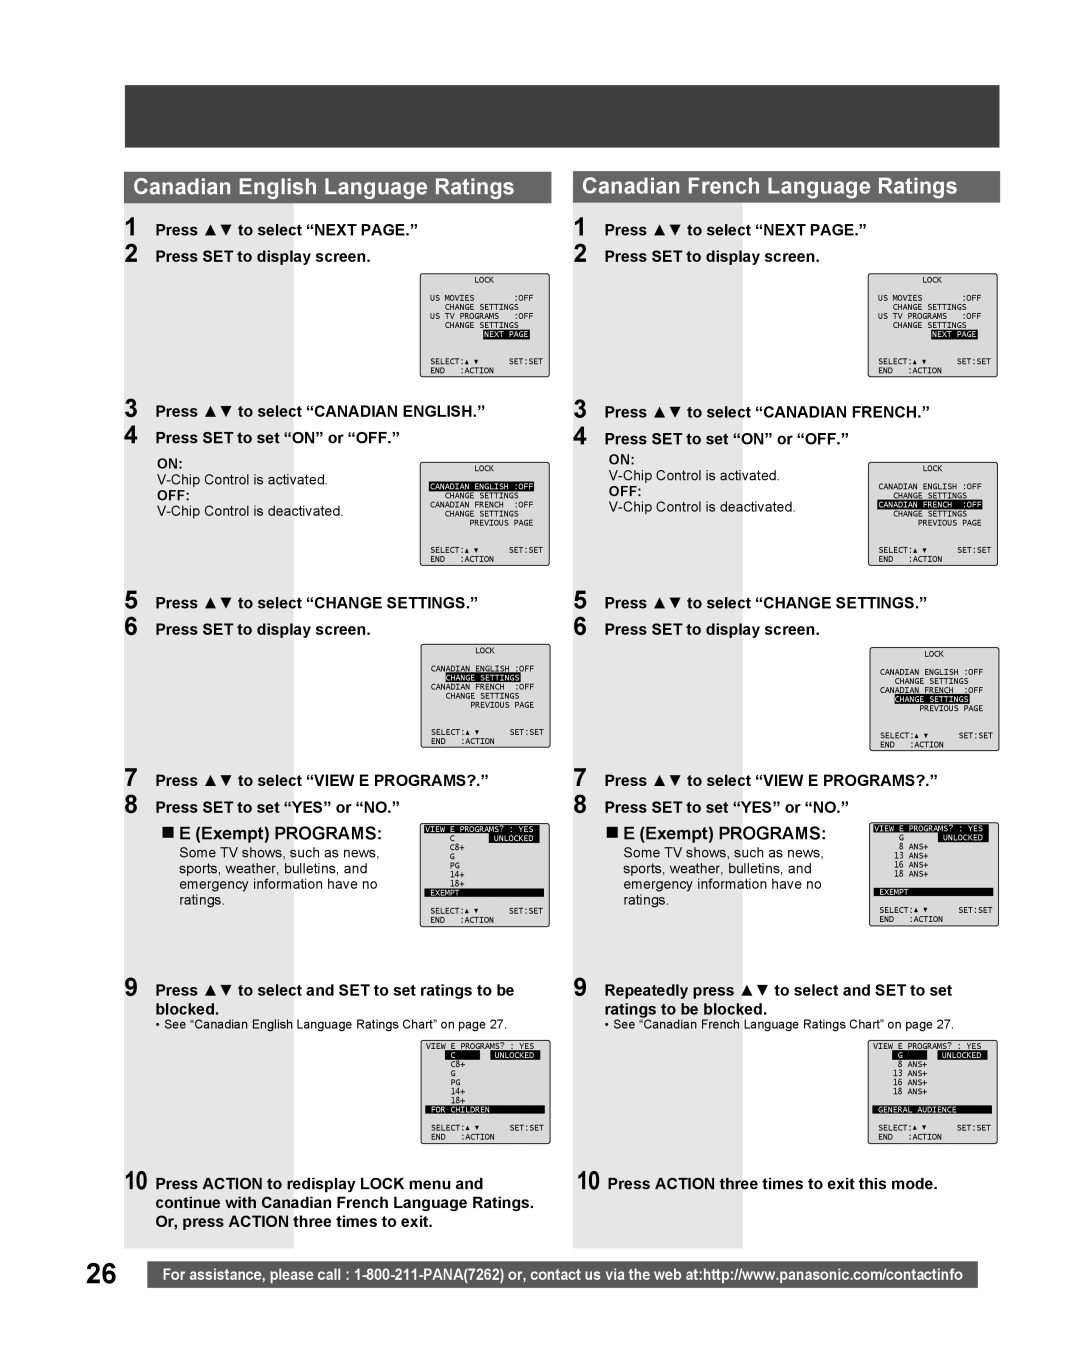 Panasonic PV-27DF5 manual Canadian English Language Ratings, Canadian French Language Ratings, „ E Exempt PROGRAMS 